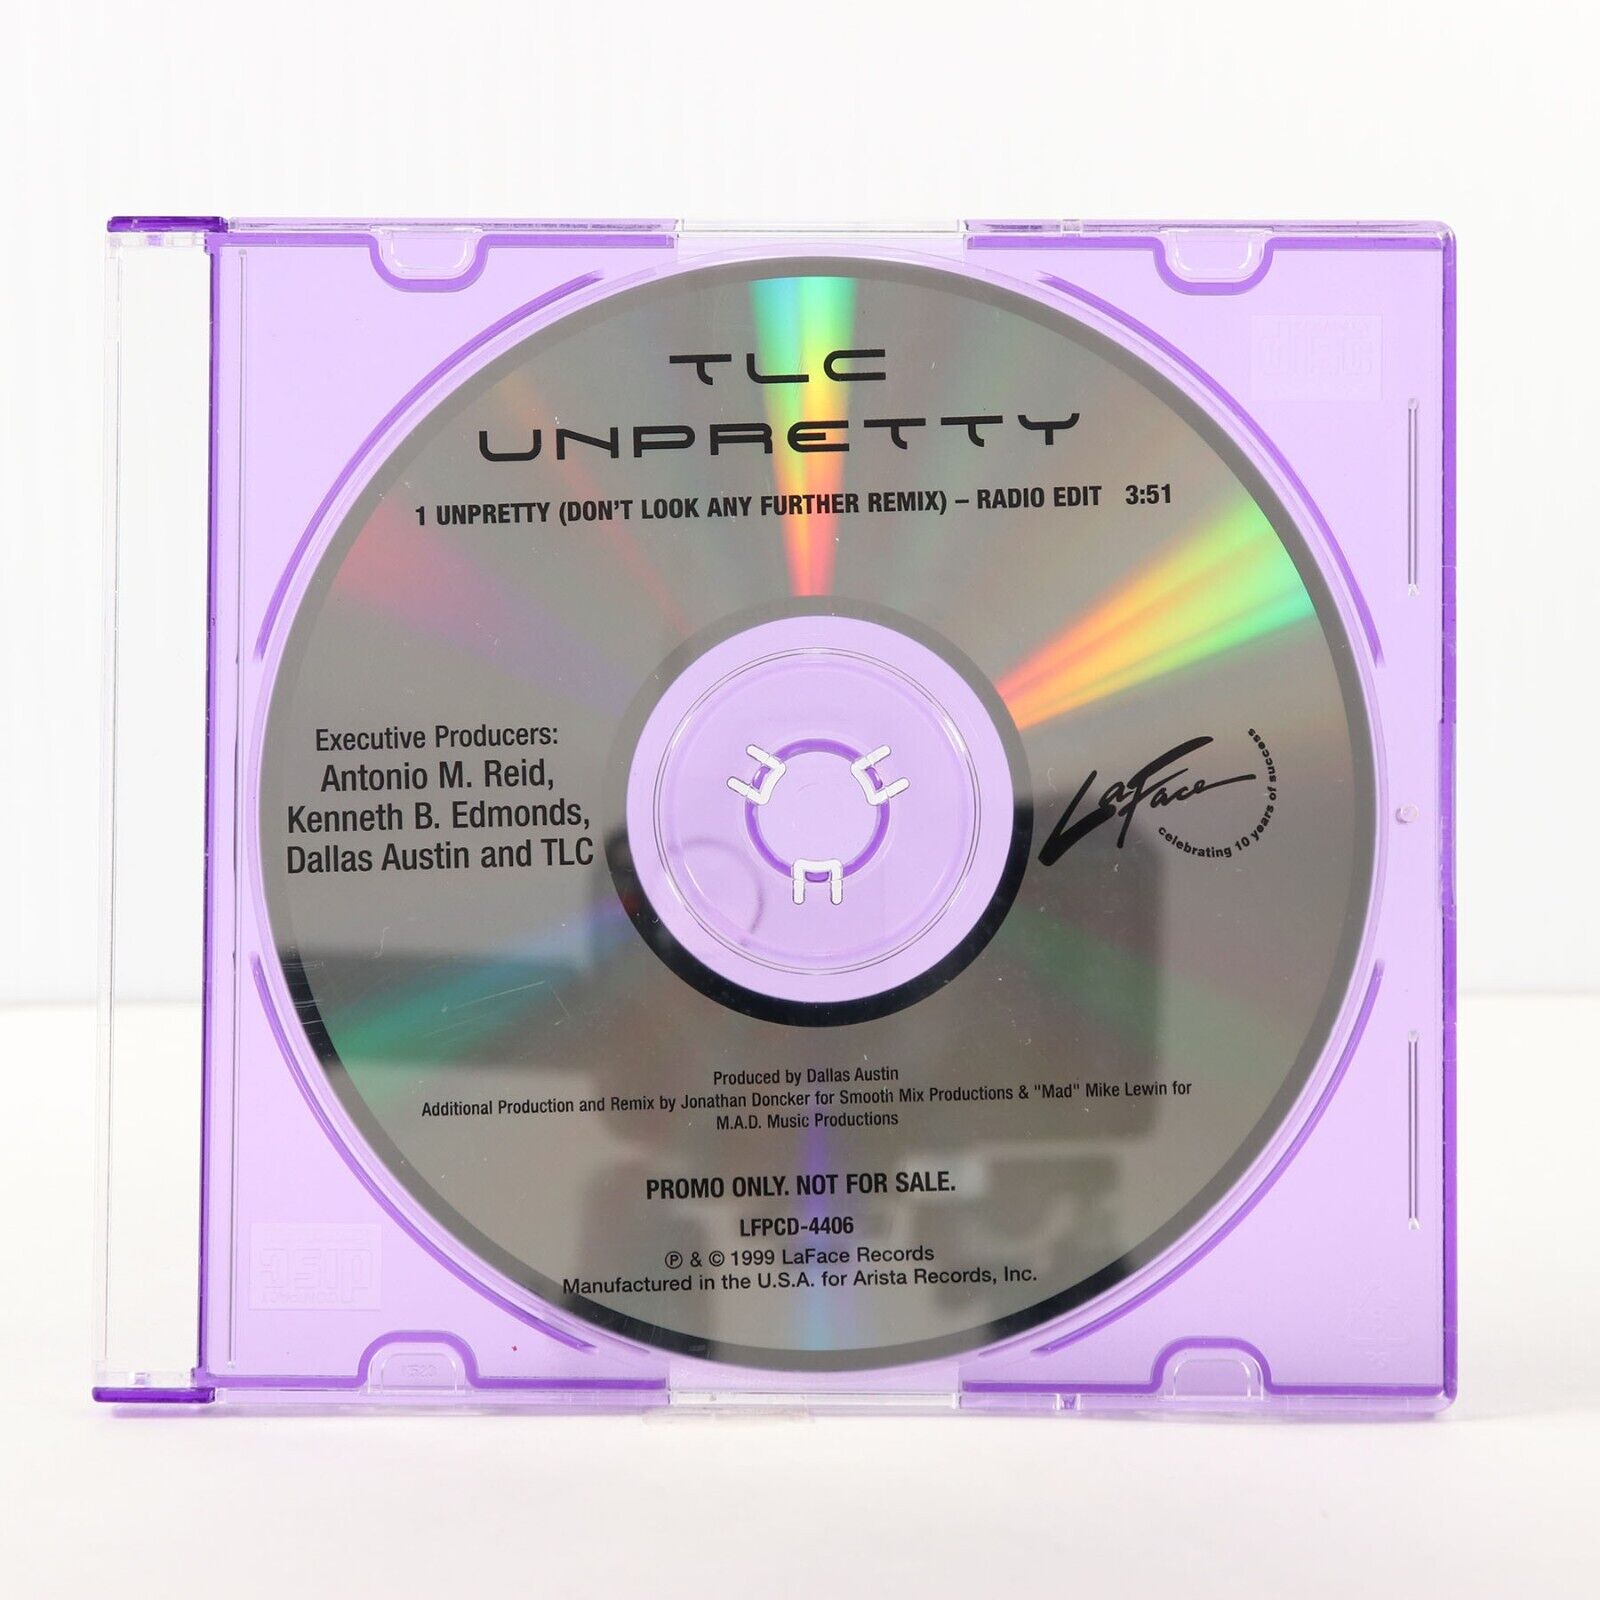 TLC - Unpretty Promo CD Single 1999 Radio Edit LeFace LFPCD-4406